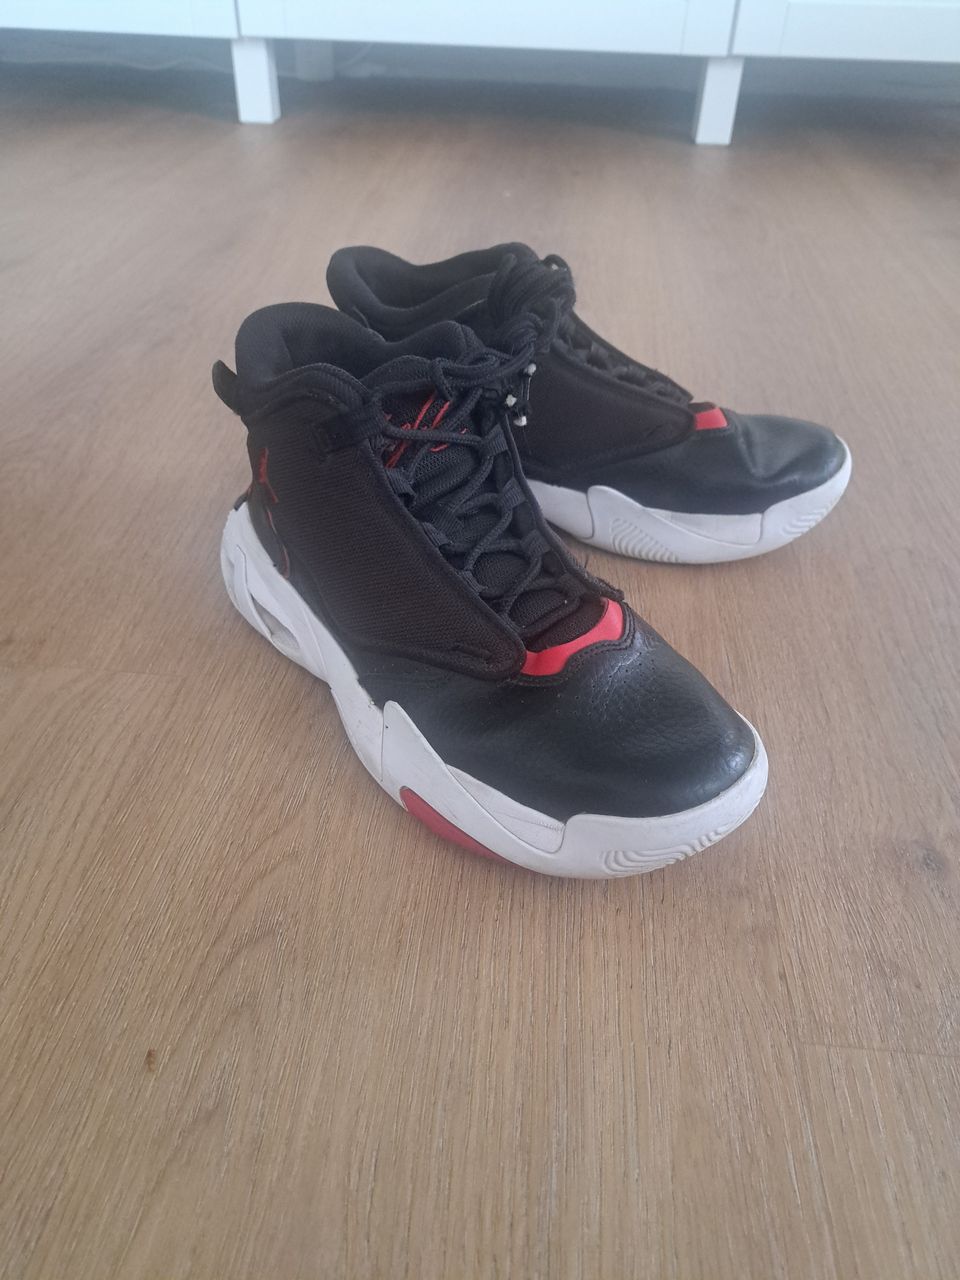 Nike Jordan 38